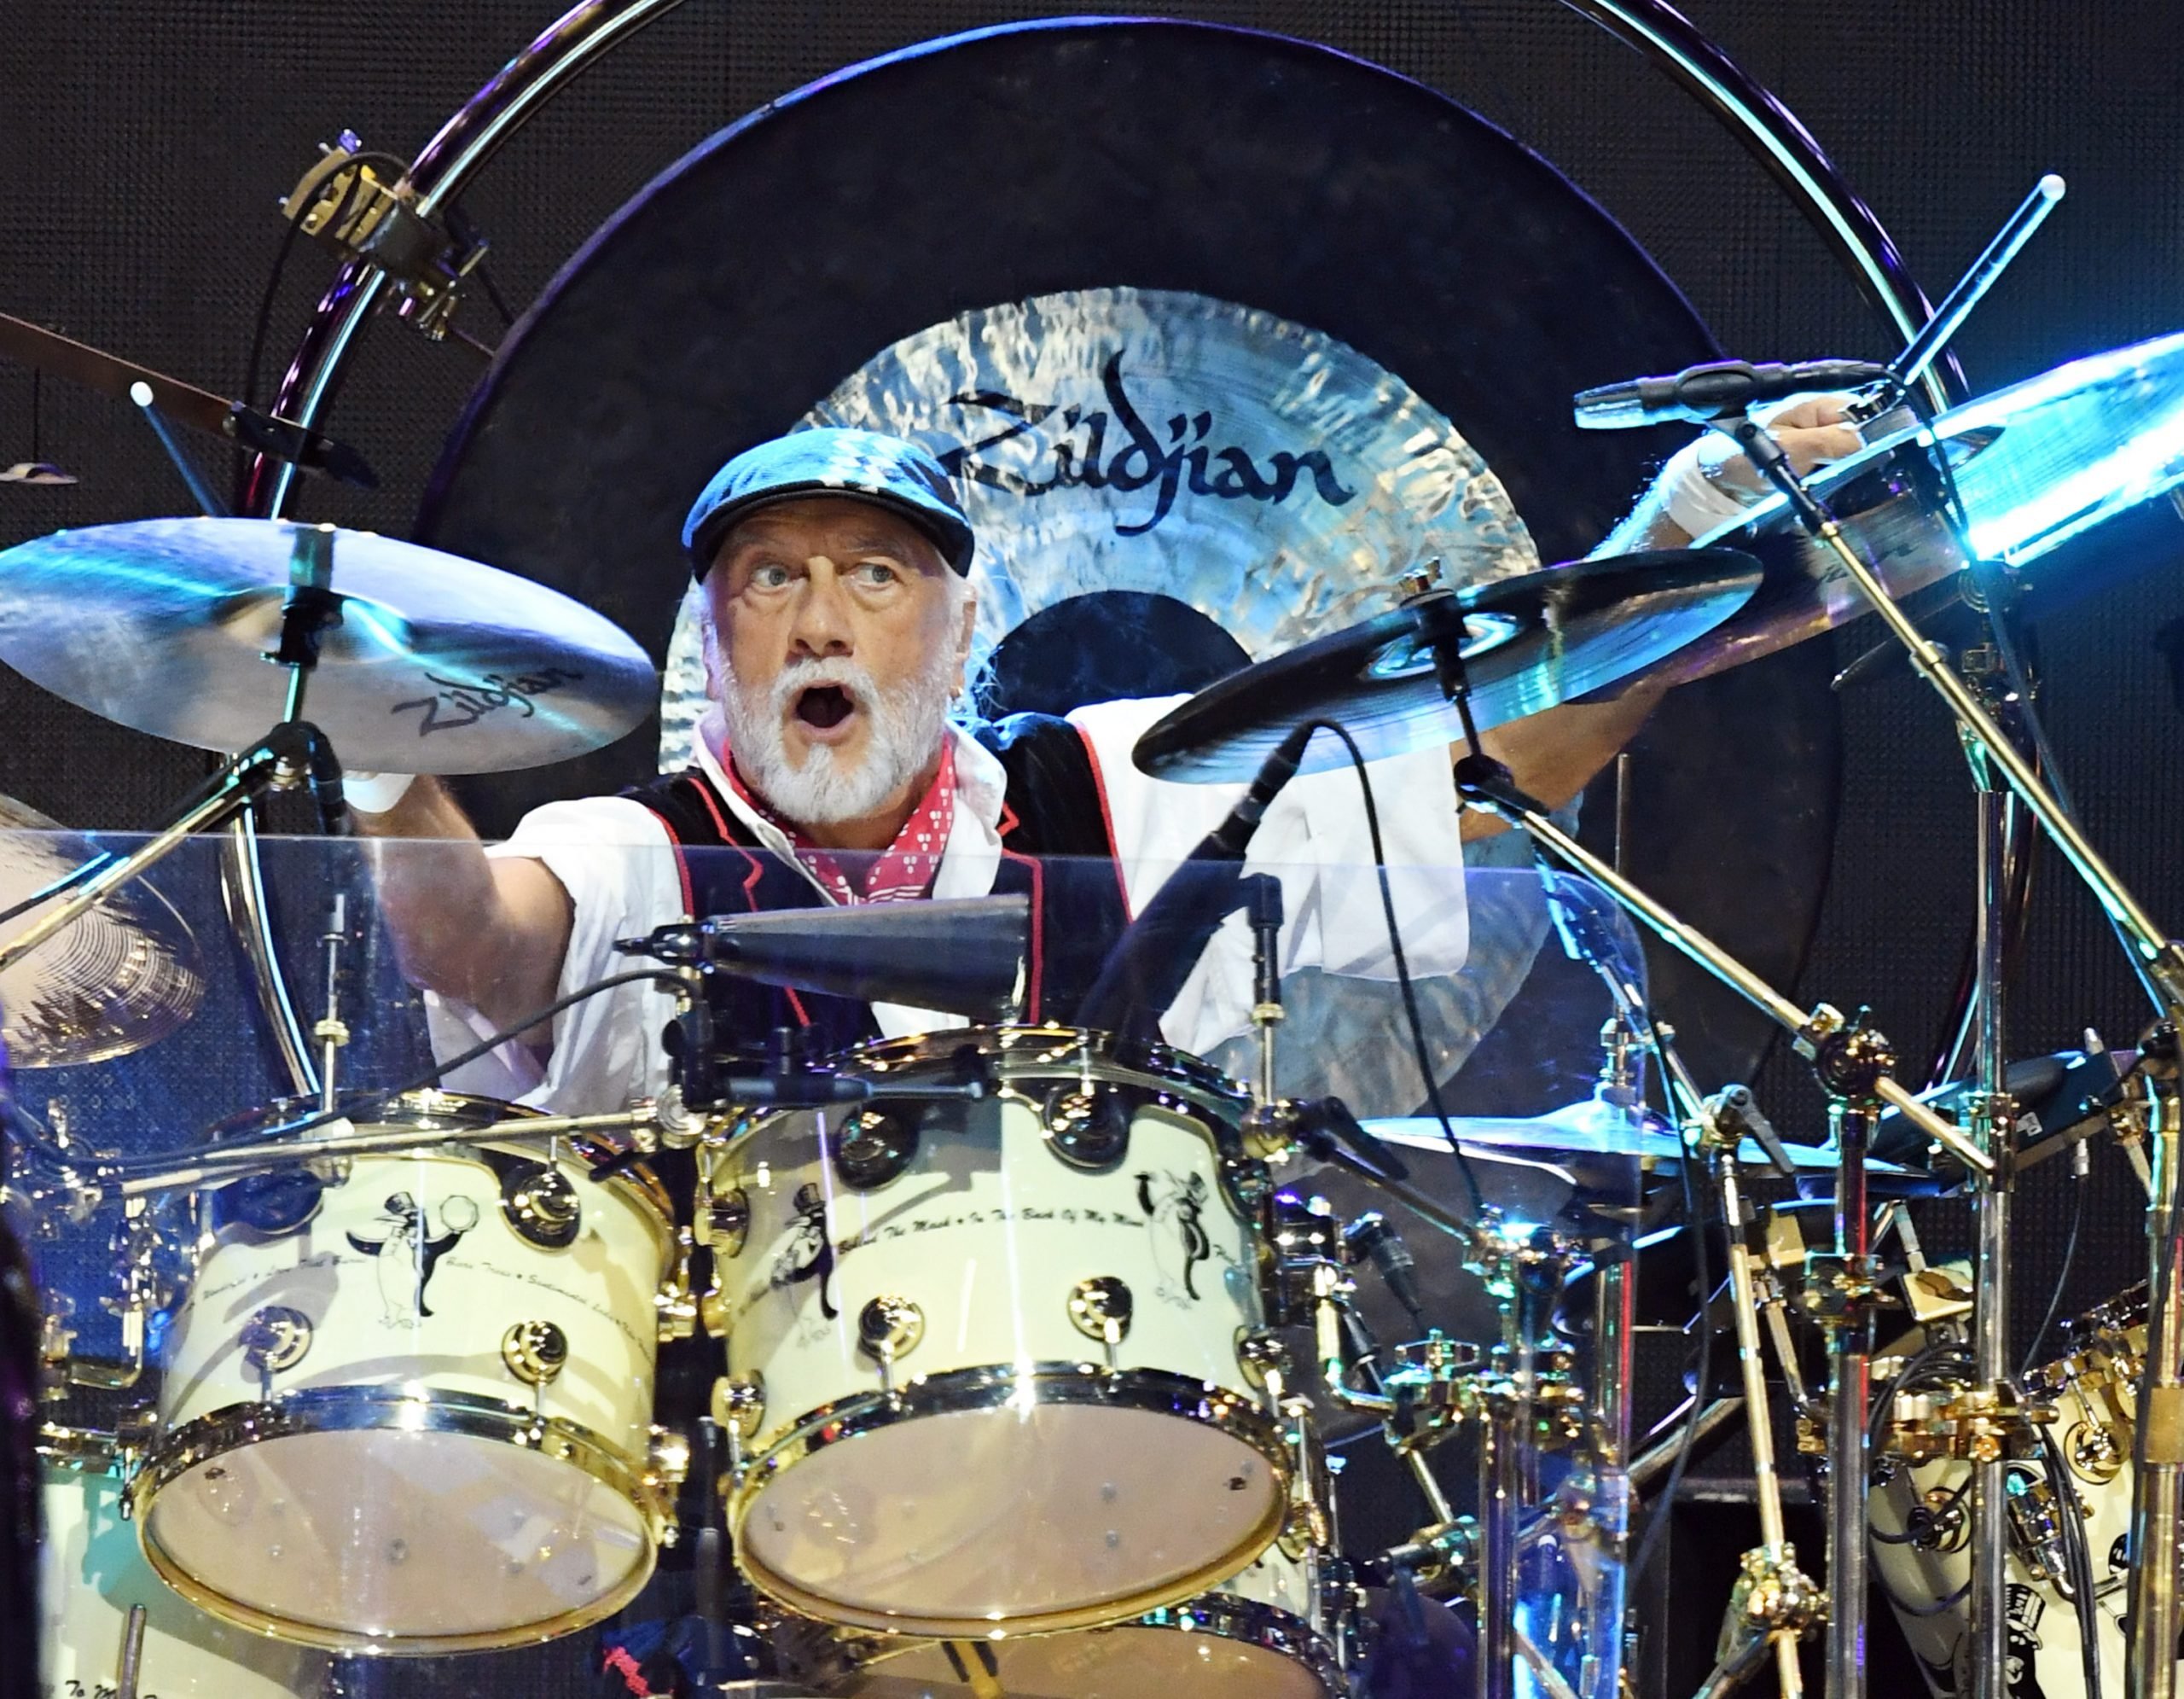 Drummer Mick Fleetwood of Fleetwood Mac